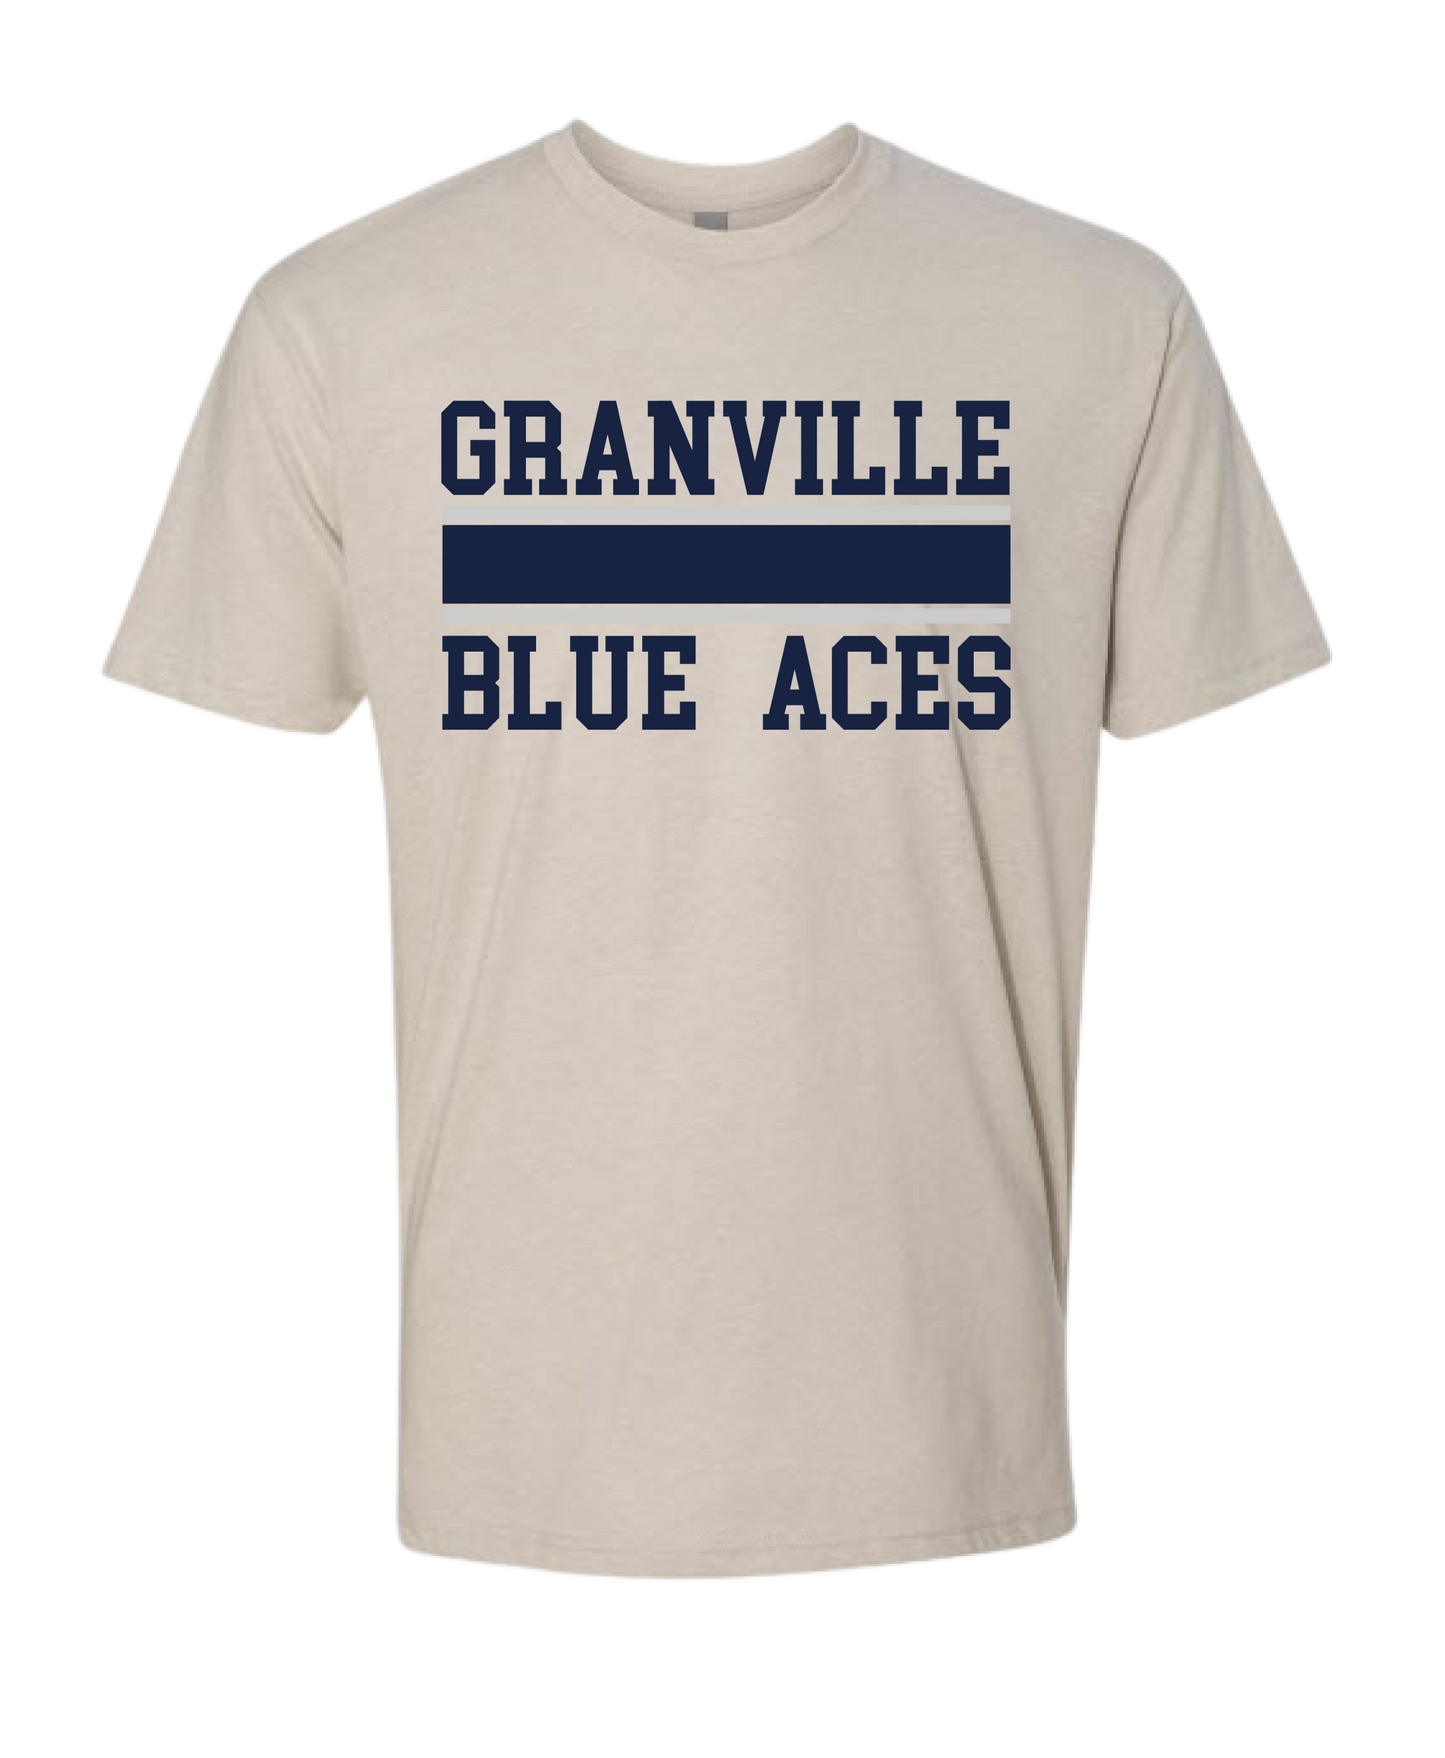 Granville Blue Aces Tee